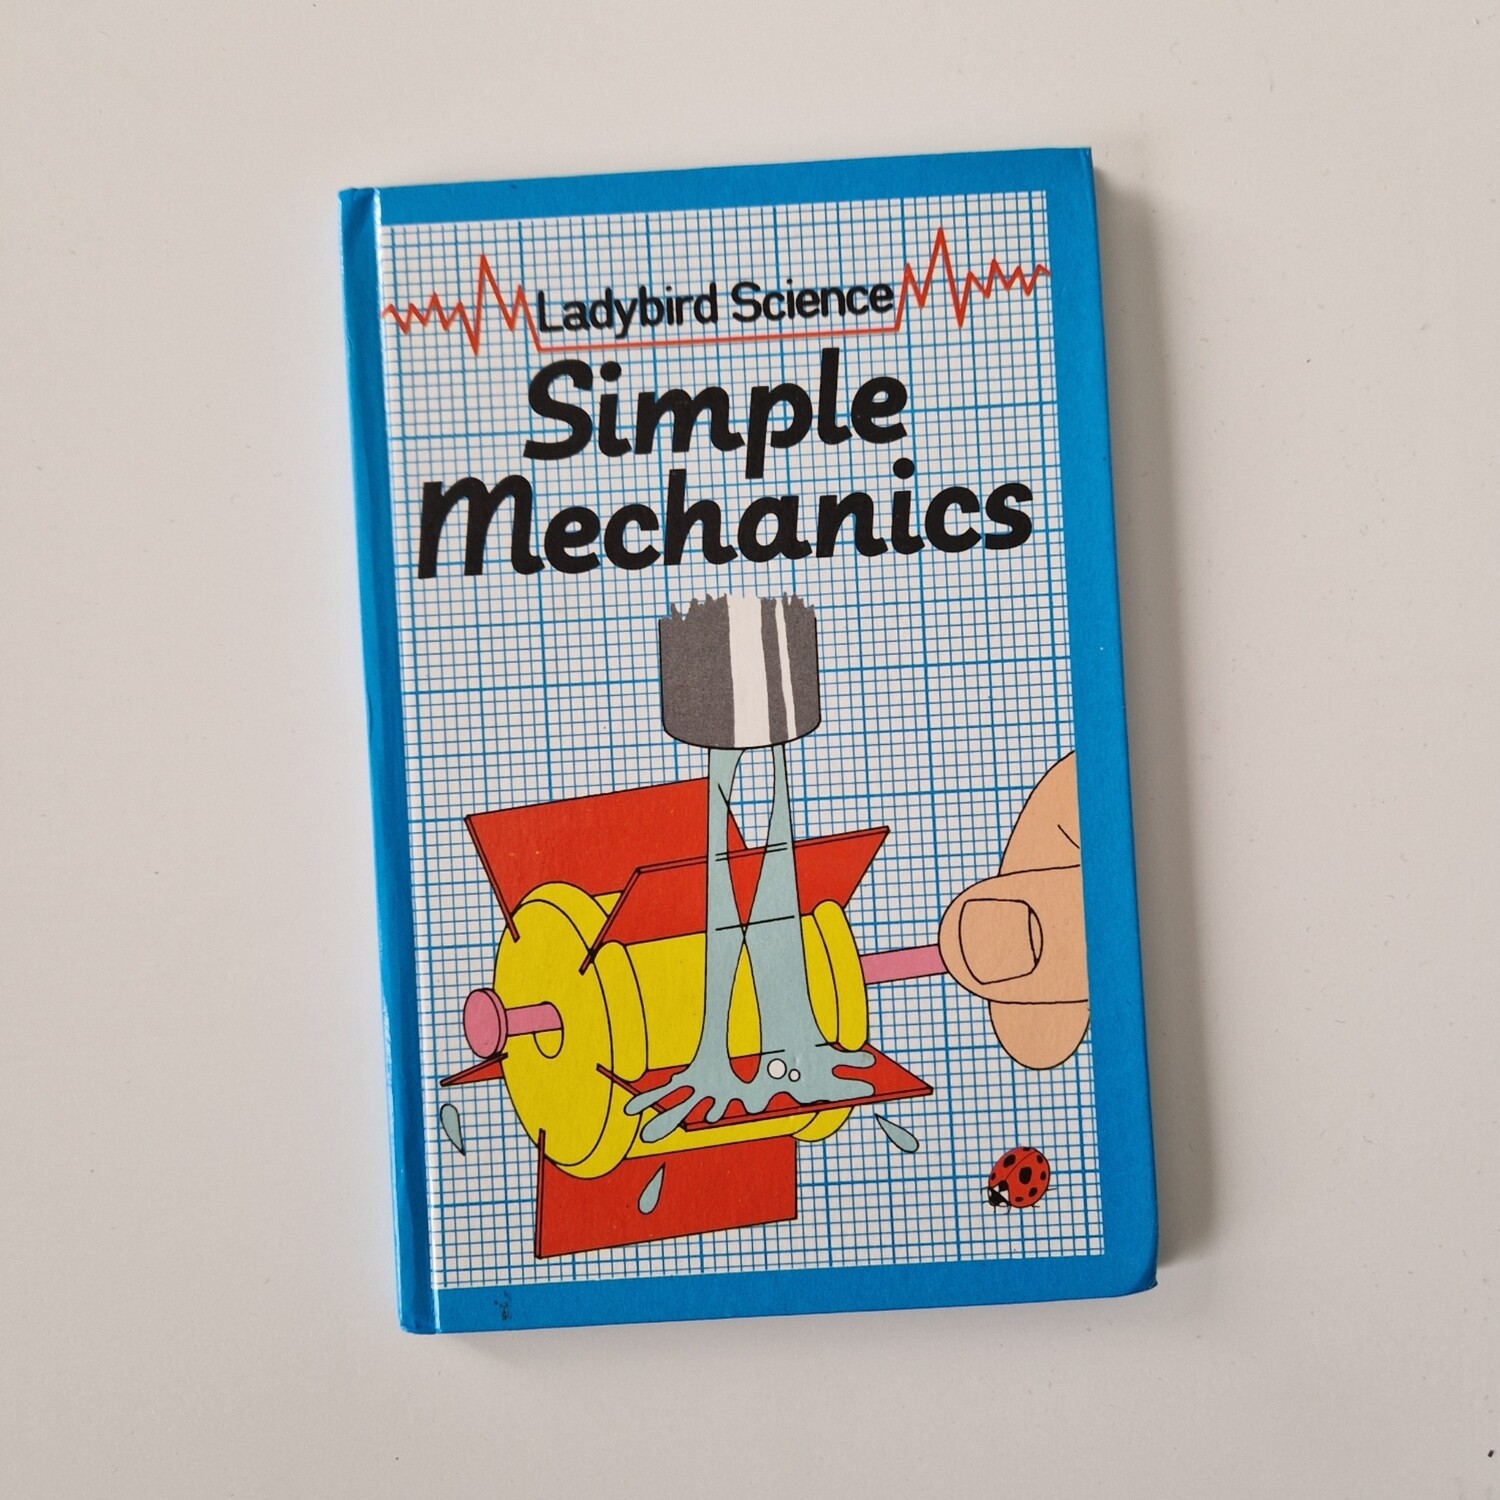 Simple Mechanics - Ladybird Science Book 1982